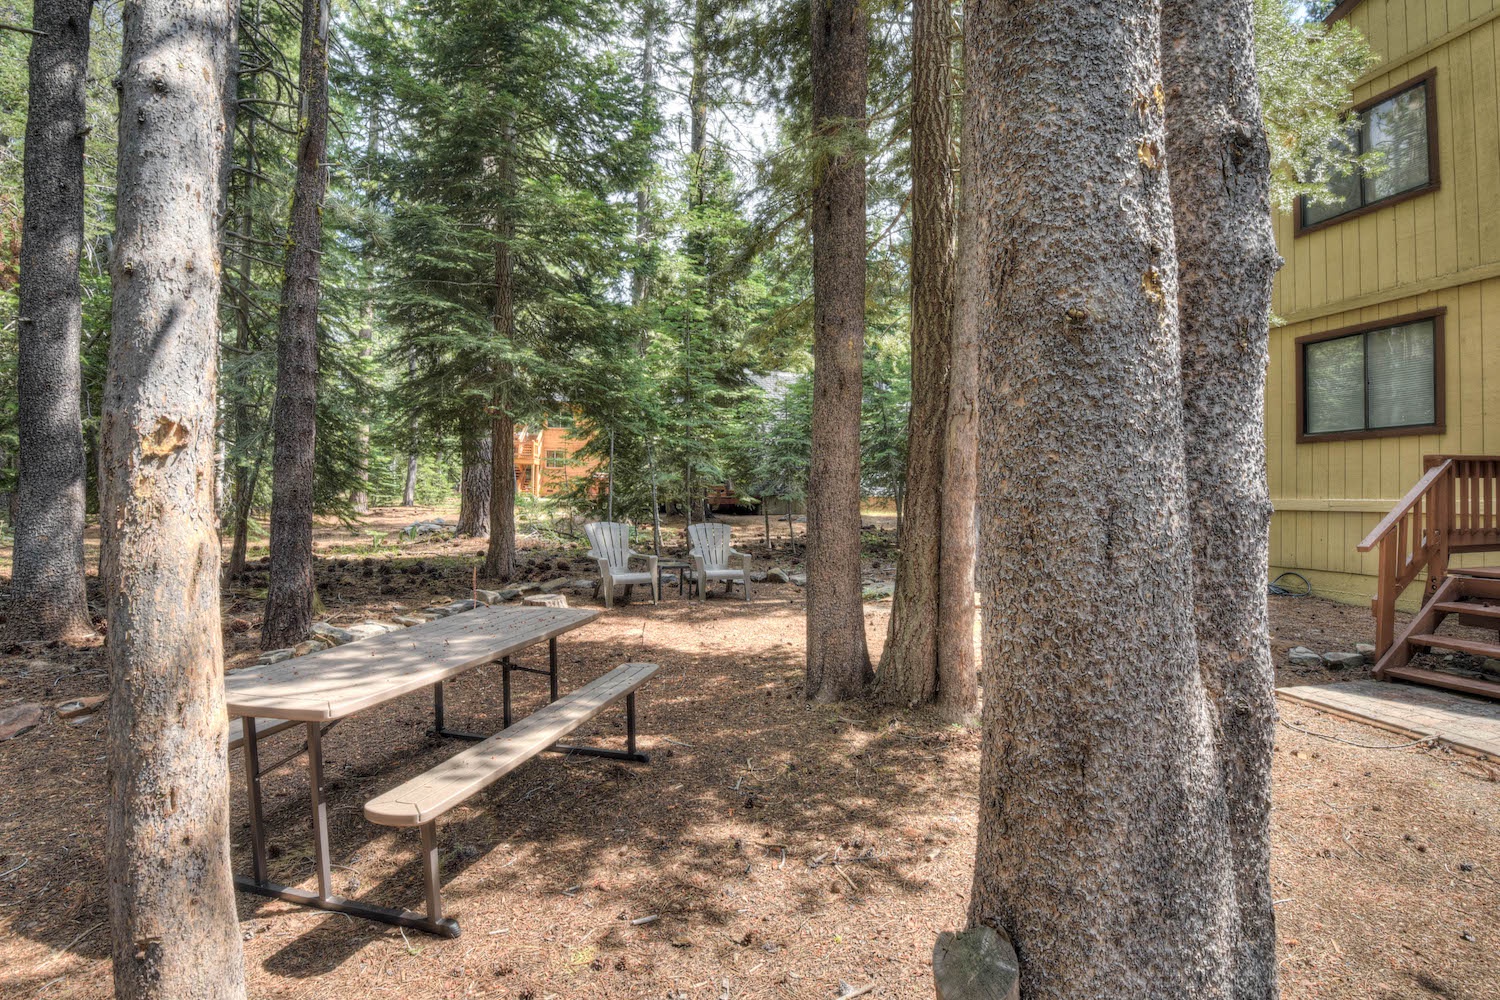 Backyard with picnic seating - 20 min drive to Boreal Mountain, 25 min to Sugar Bowl Resort